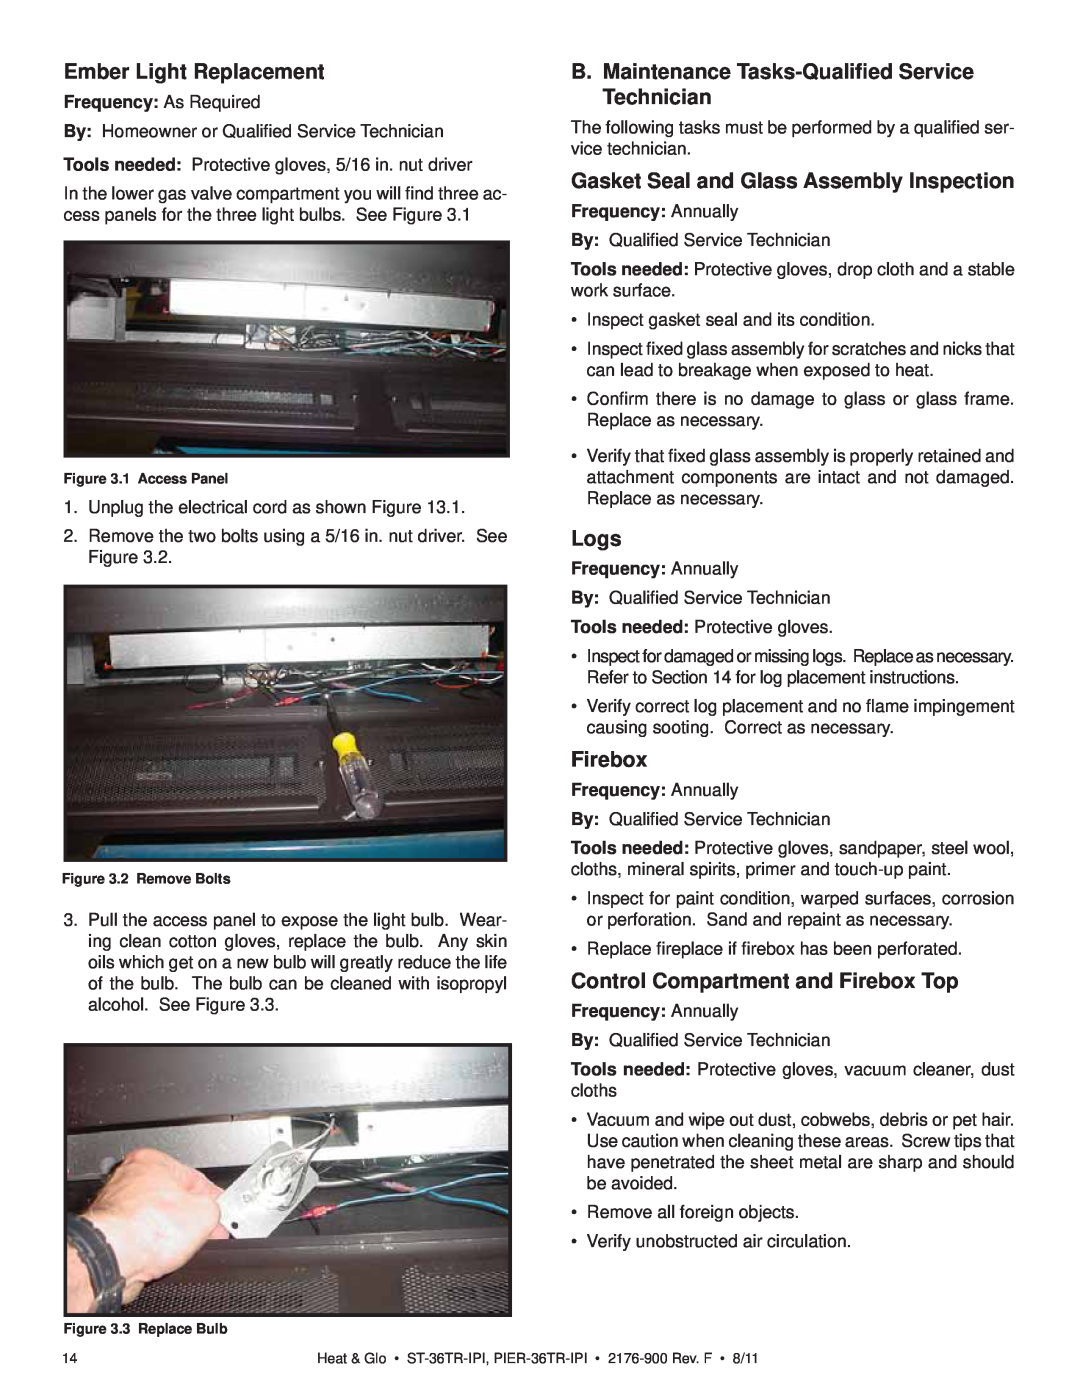 Heat & Glo LifeStyle ST-36TRLP-IPI Ember Light Replacement, B. Maintenance Tasks-Qualiﬁed Service Technician, Logs 